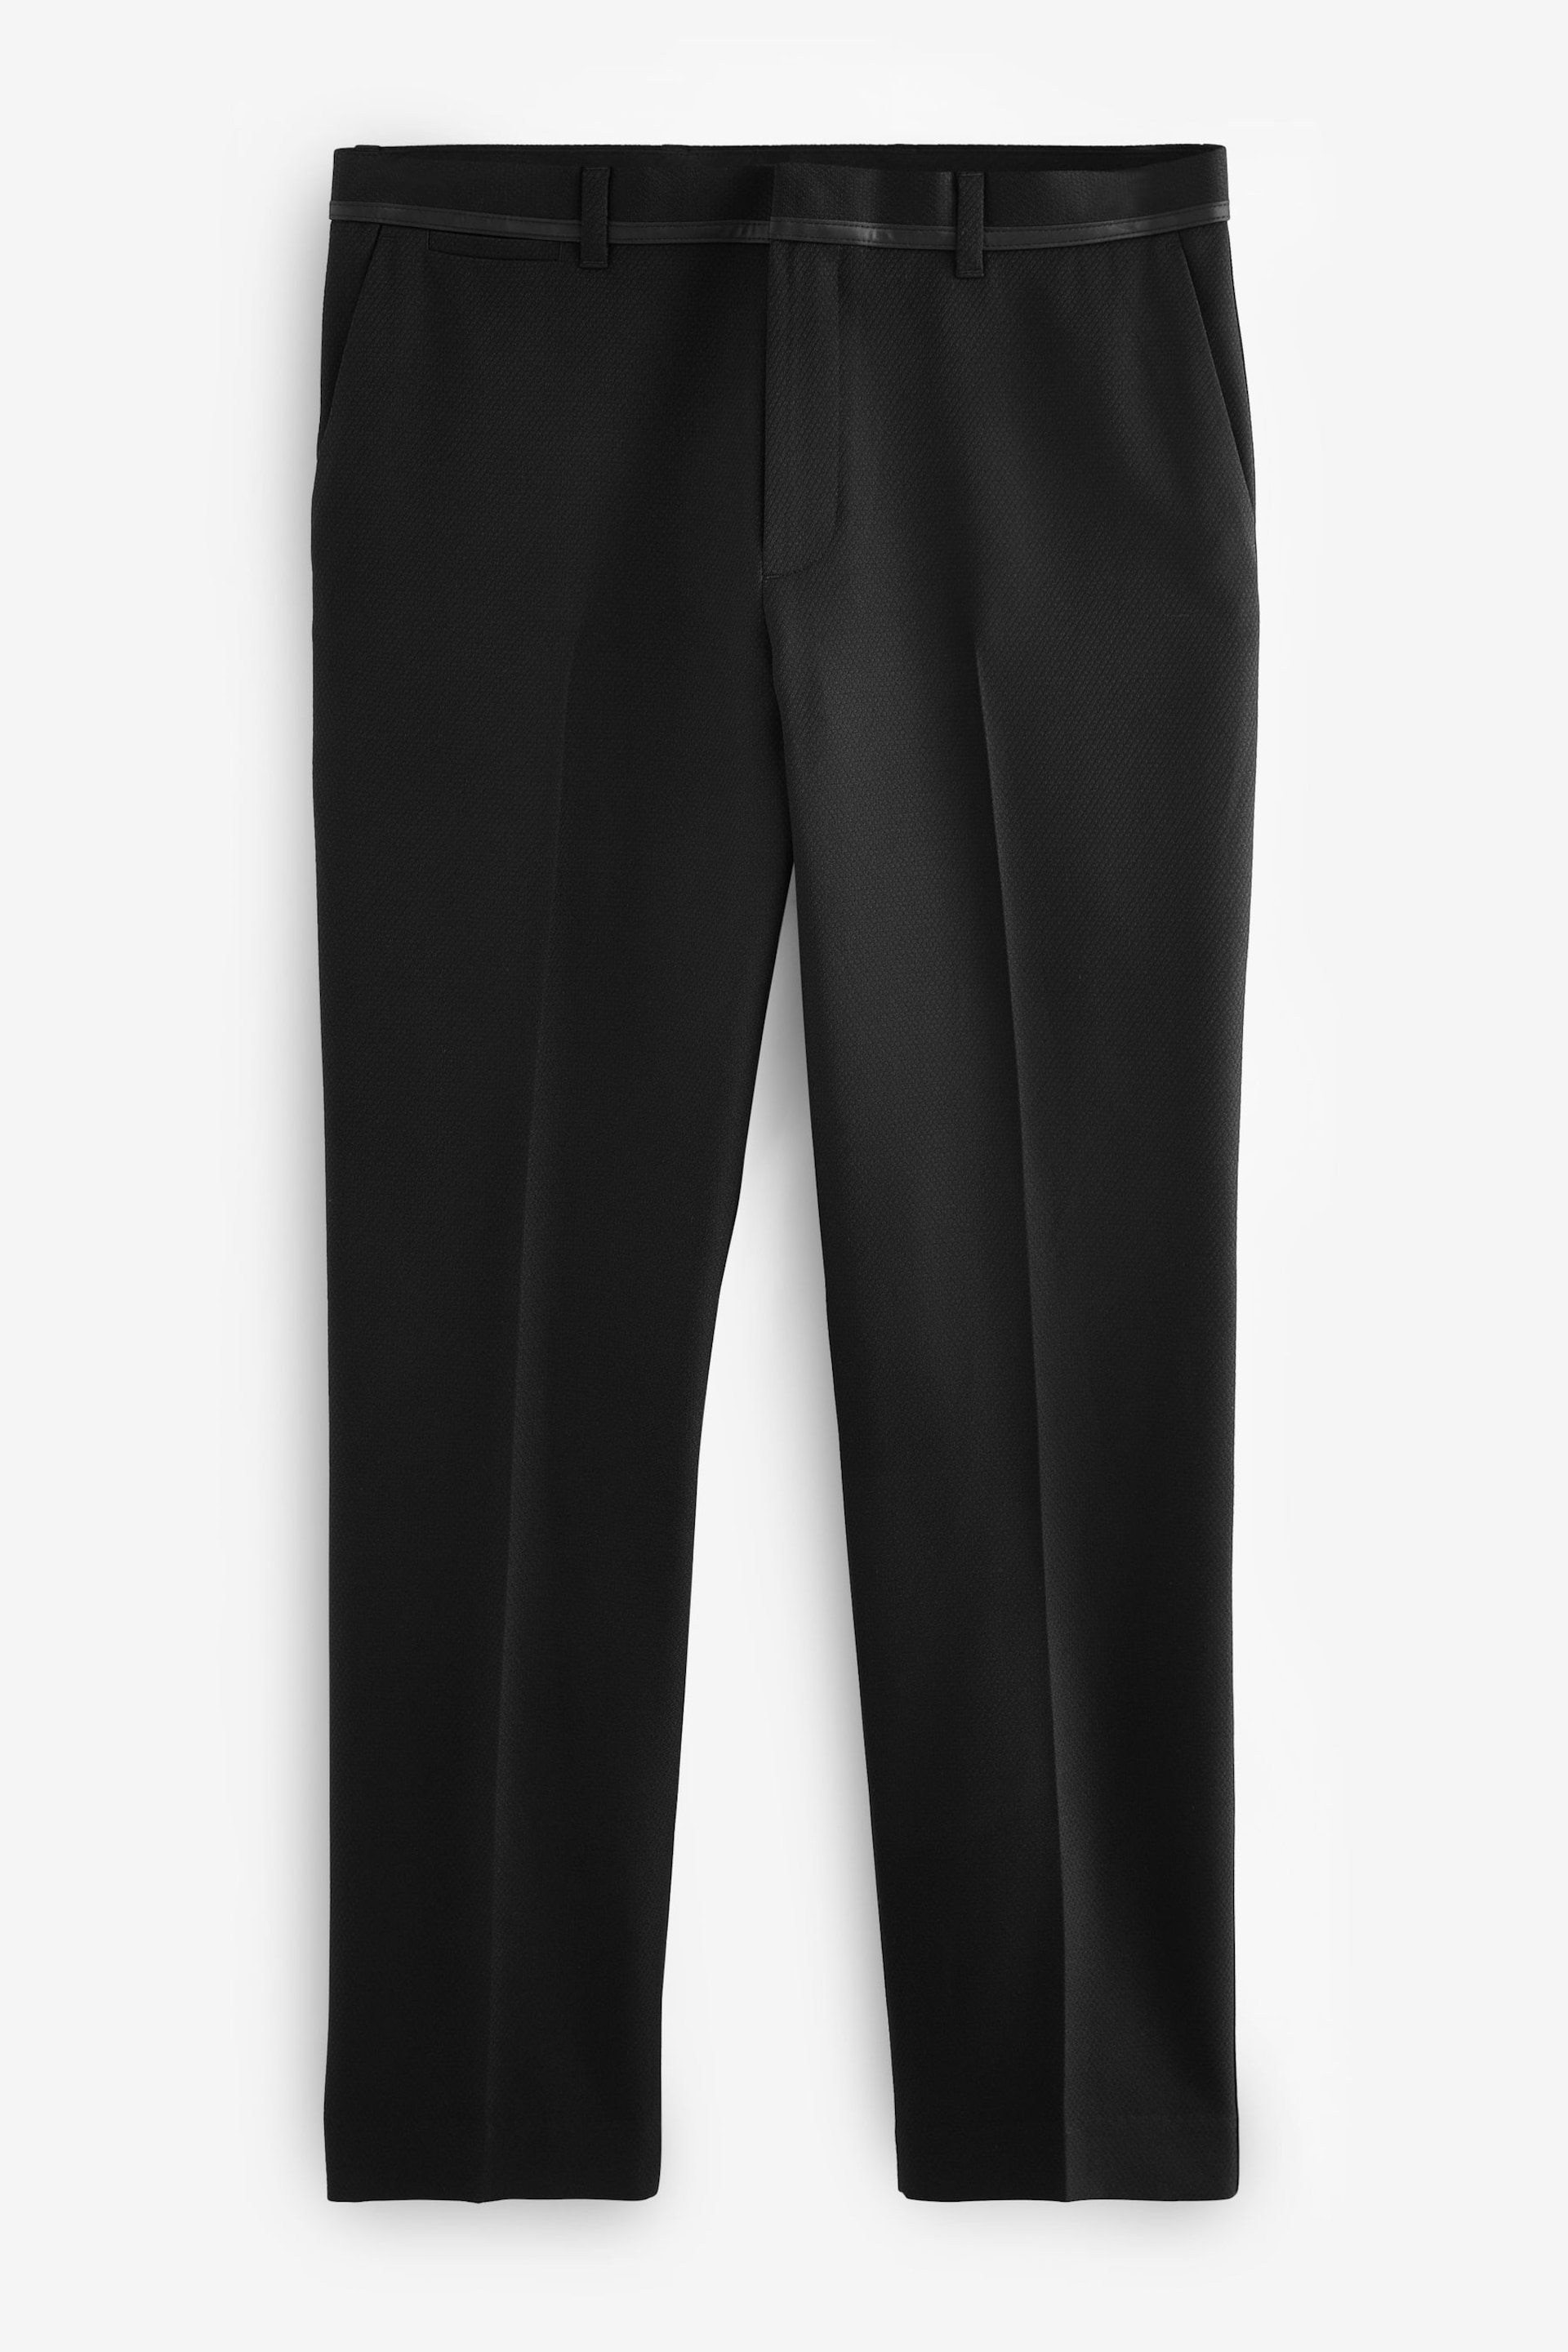 Black Tuxedo Trousers - Image 6 of 9